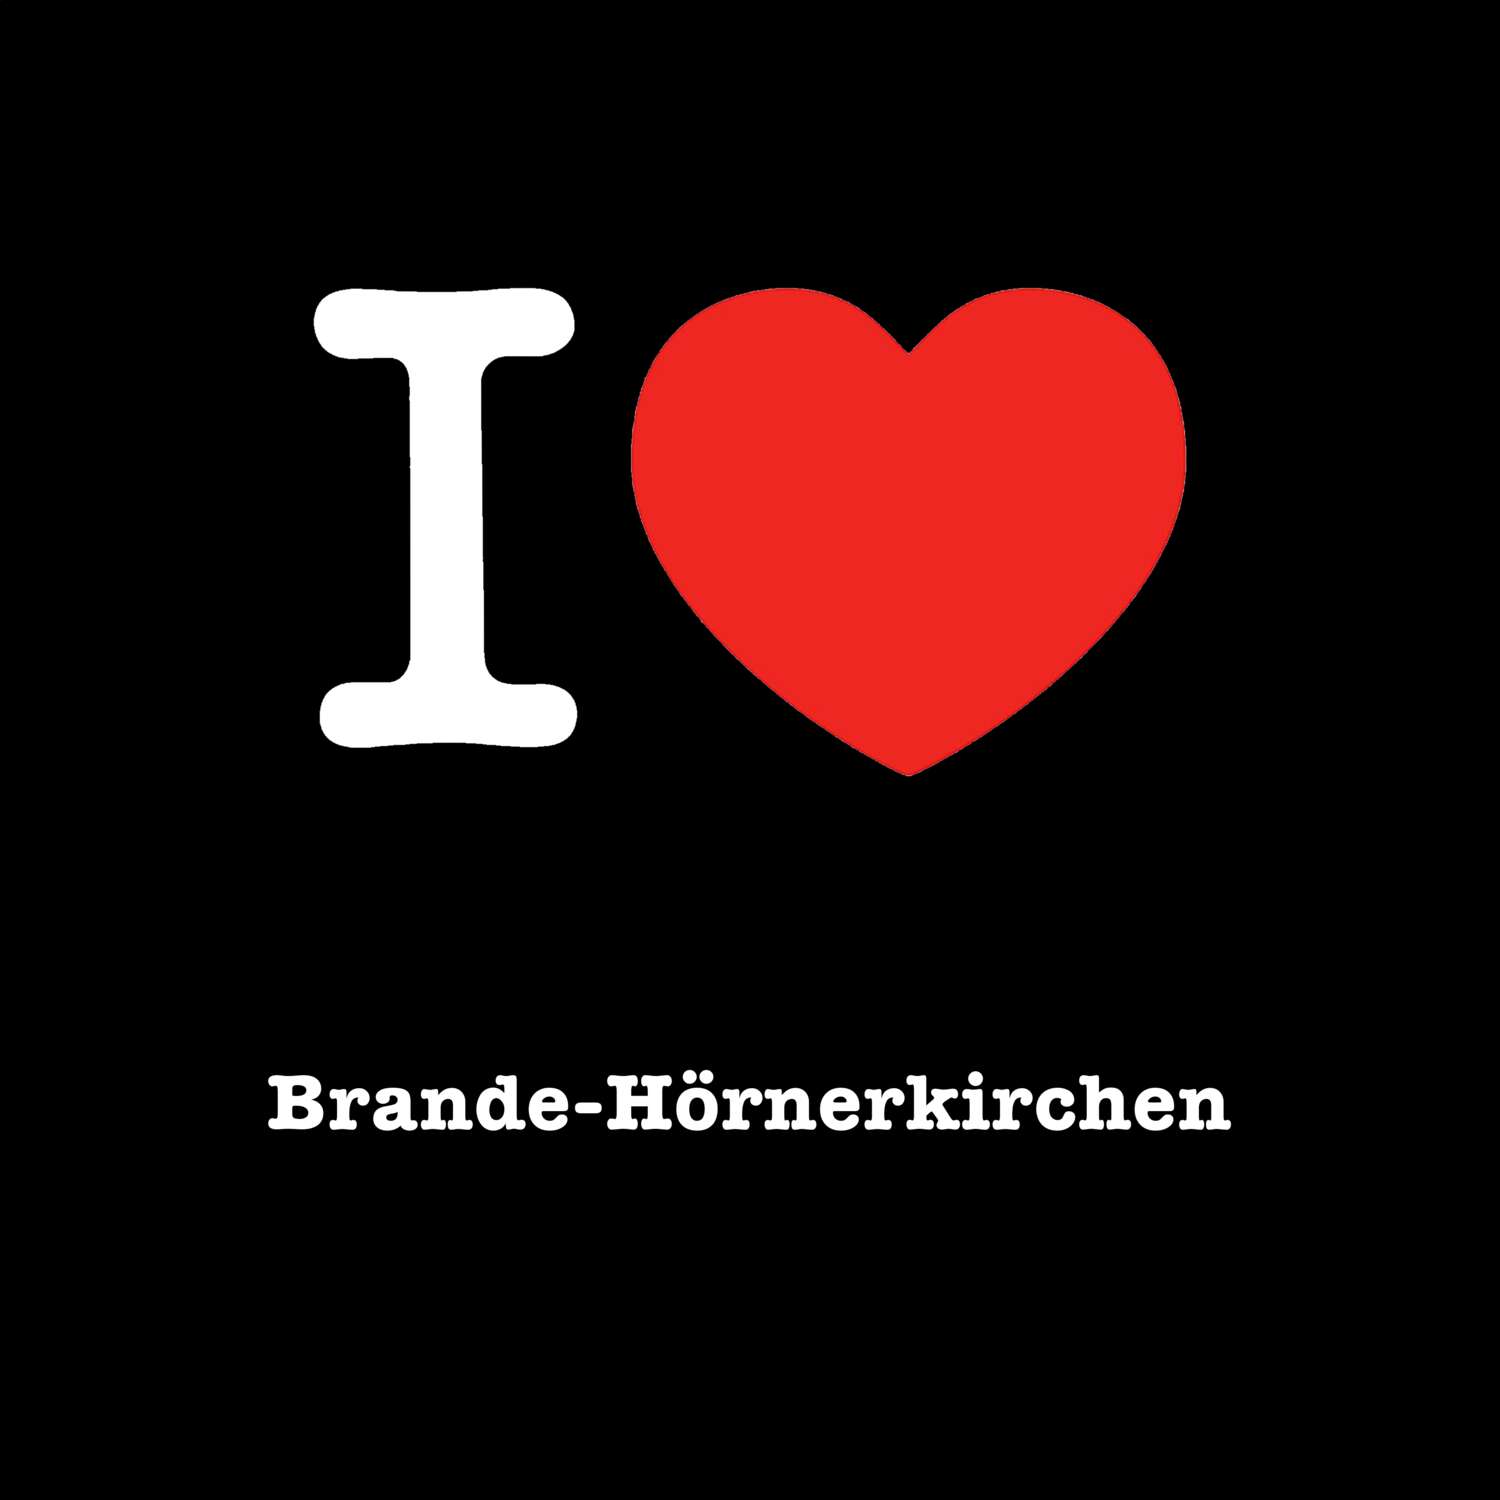 Brande-Hörnerkirchen T-Shirt »I love«